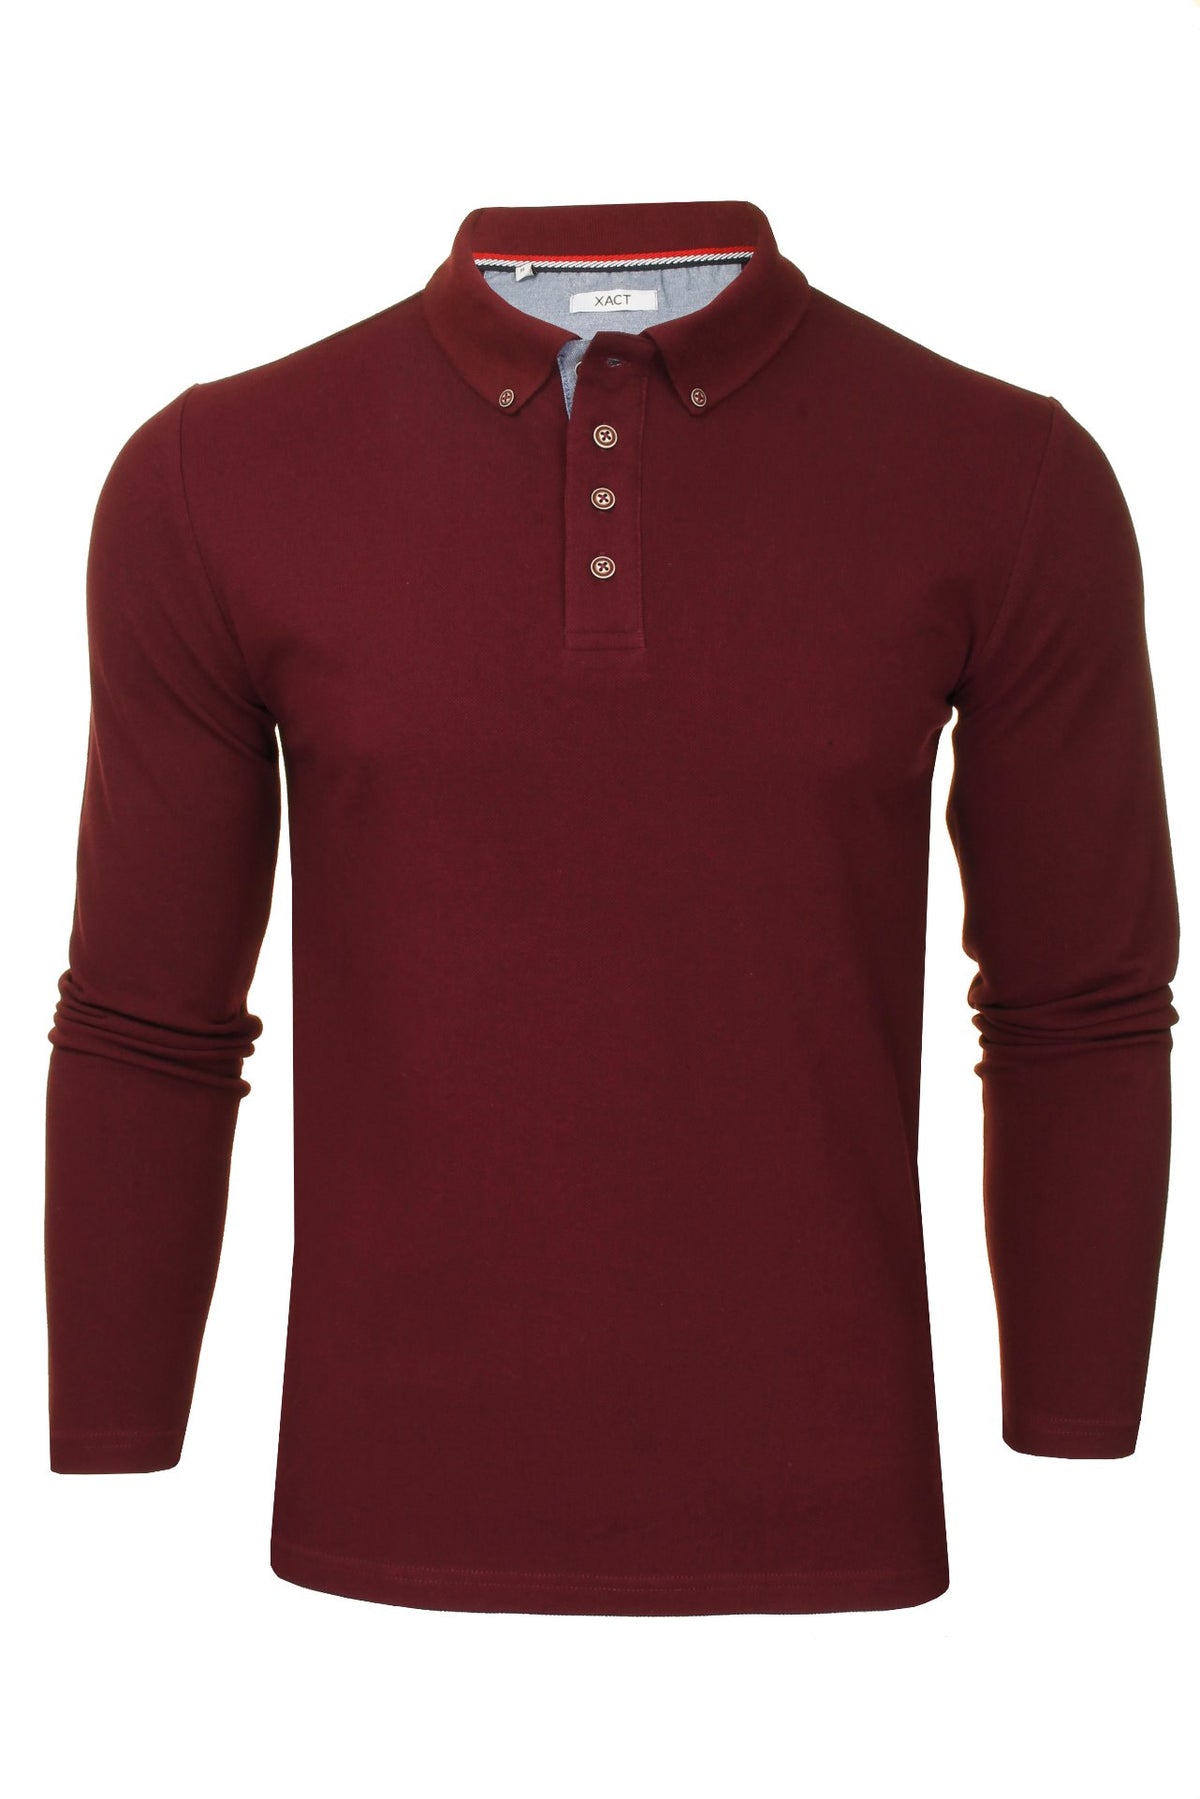 Xact Mens Polo T-Shirt Pique Long Sleeved, 01, XP1003, Burgundy